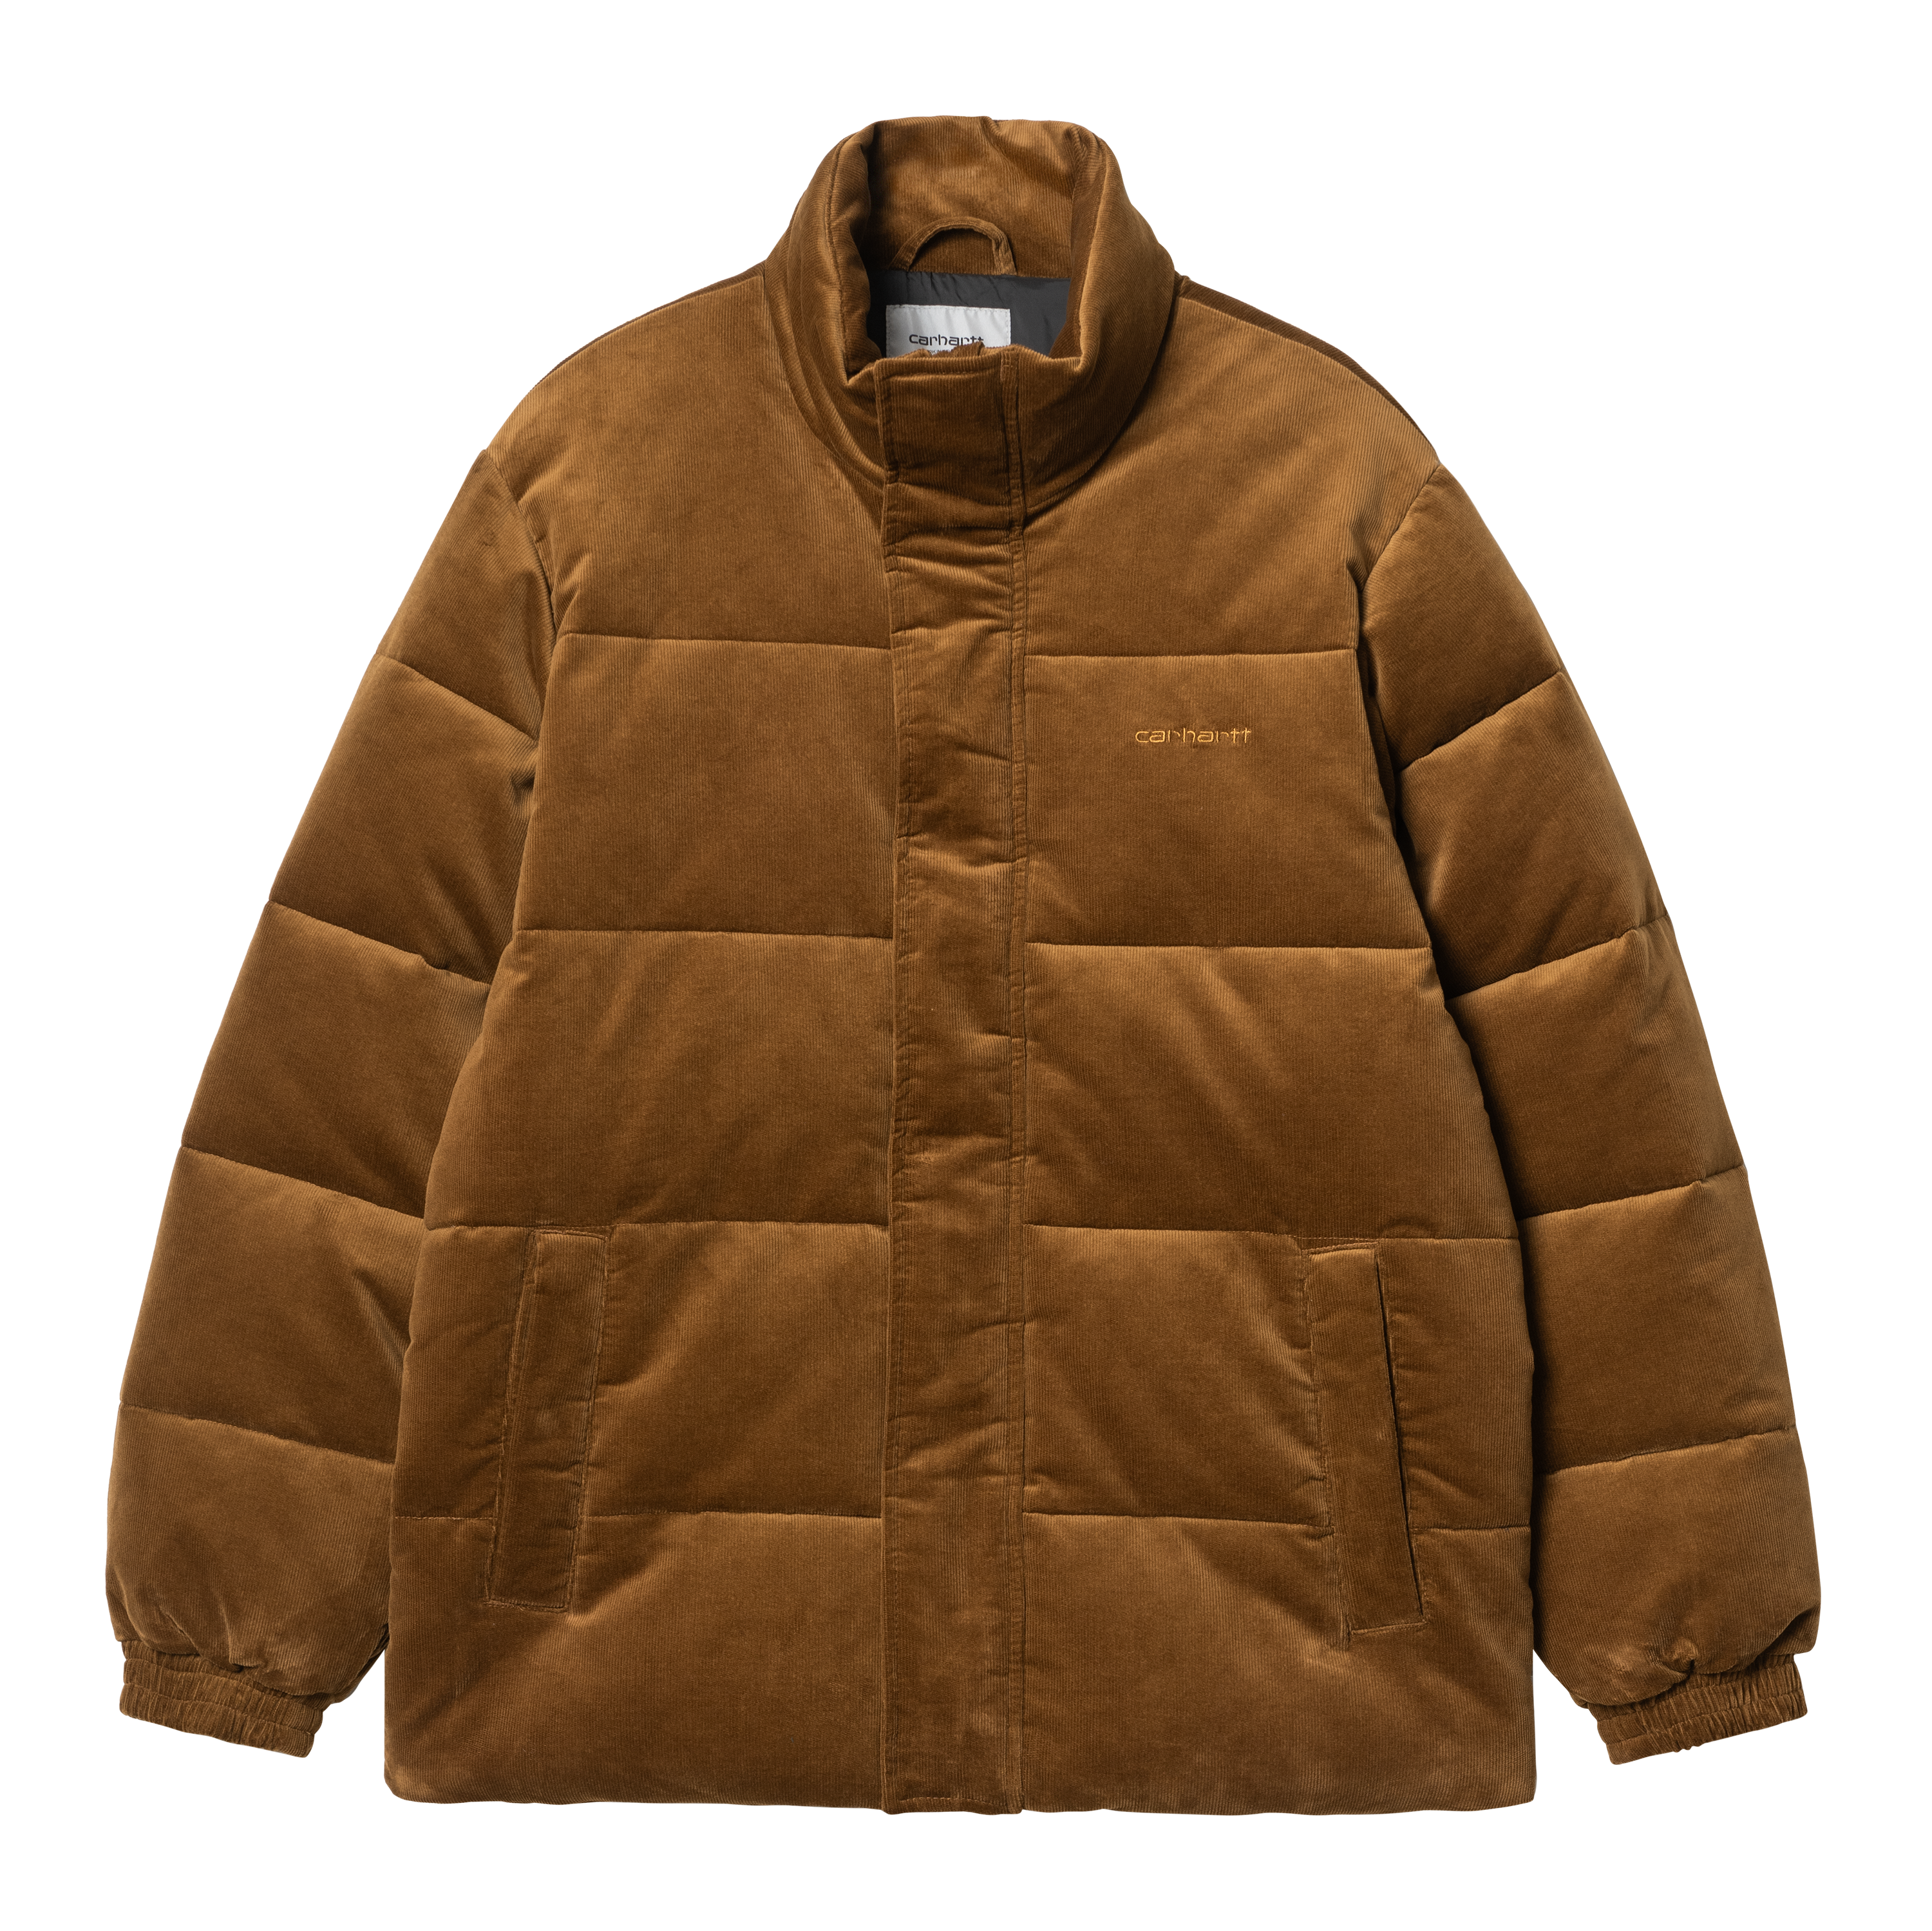 Carhartt WIP Layton Jacket in Braun